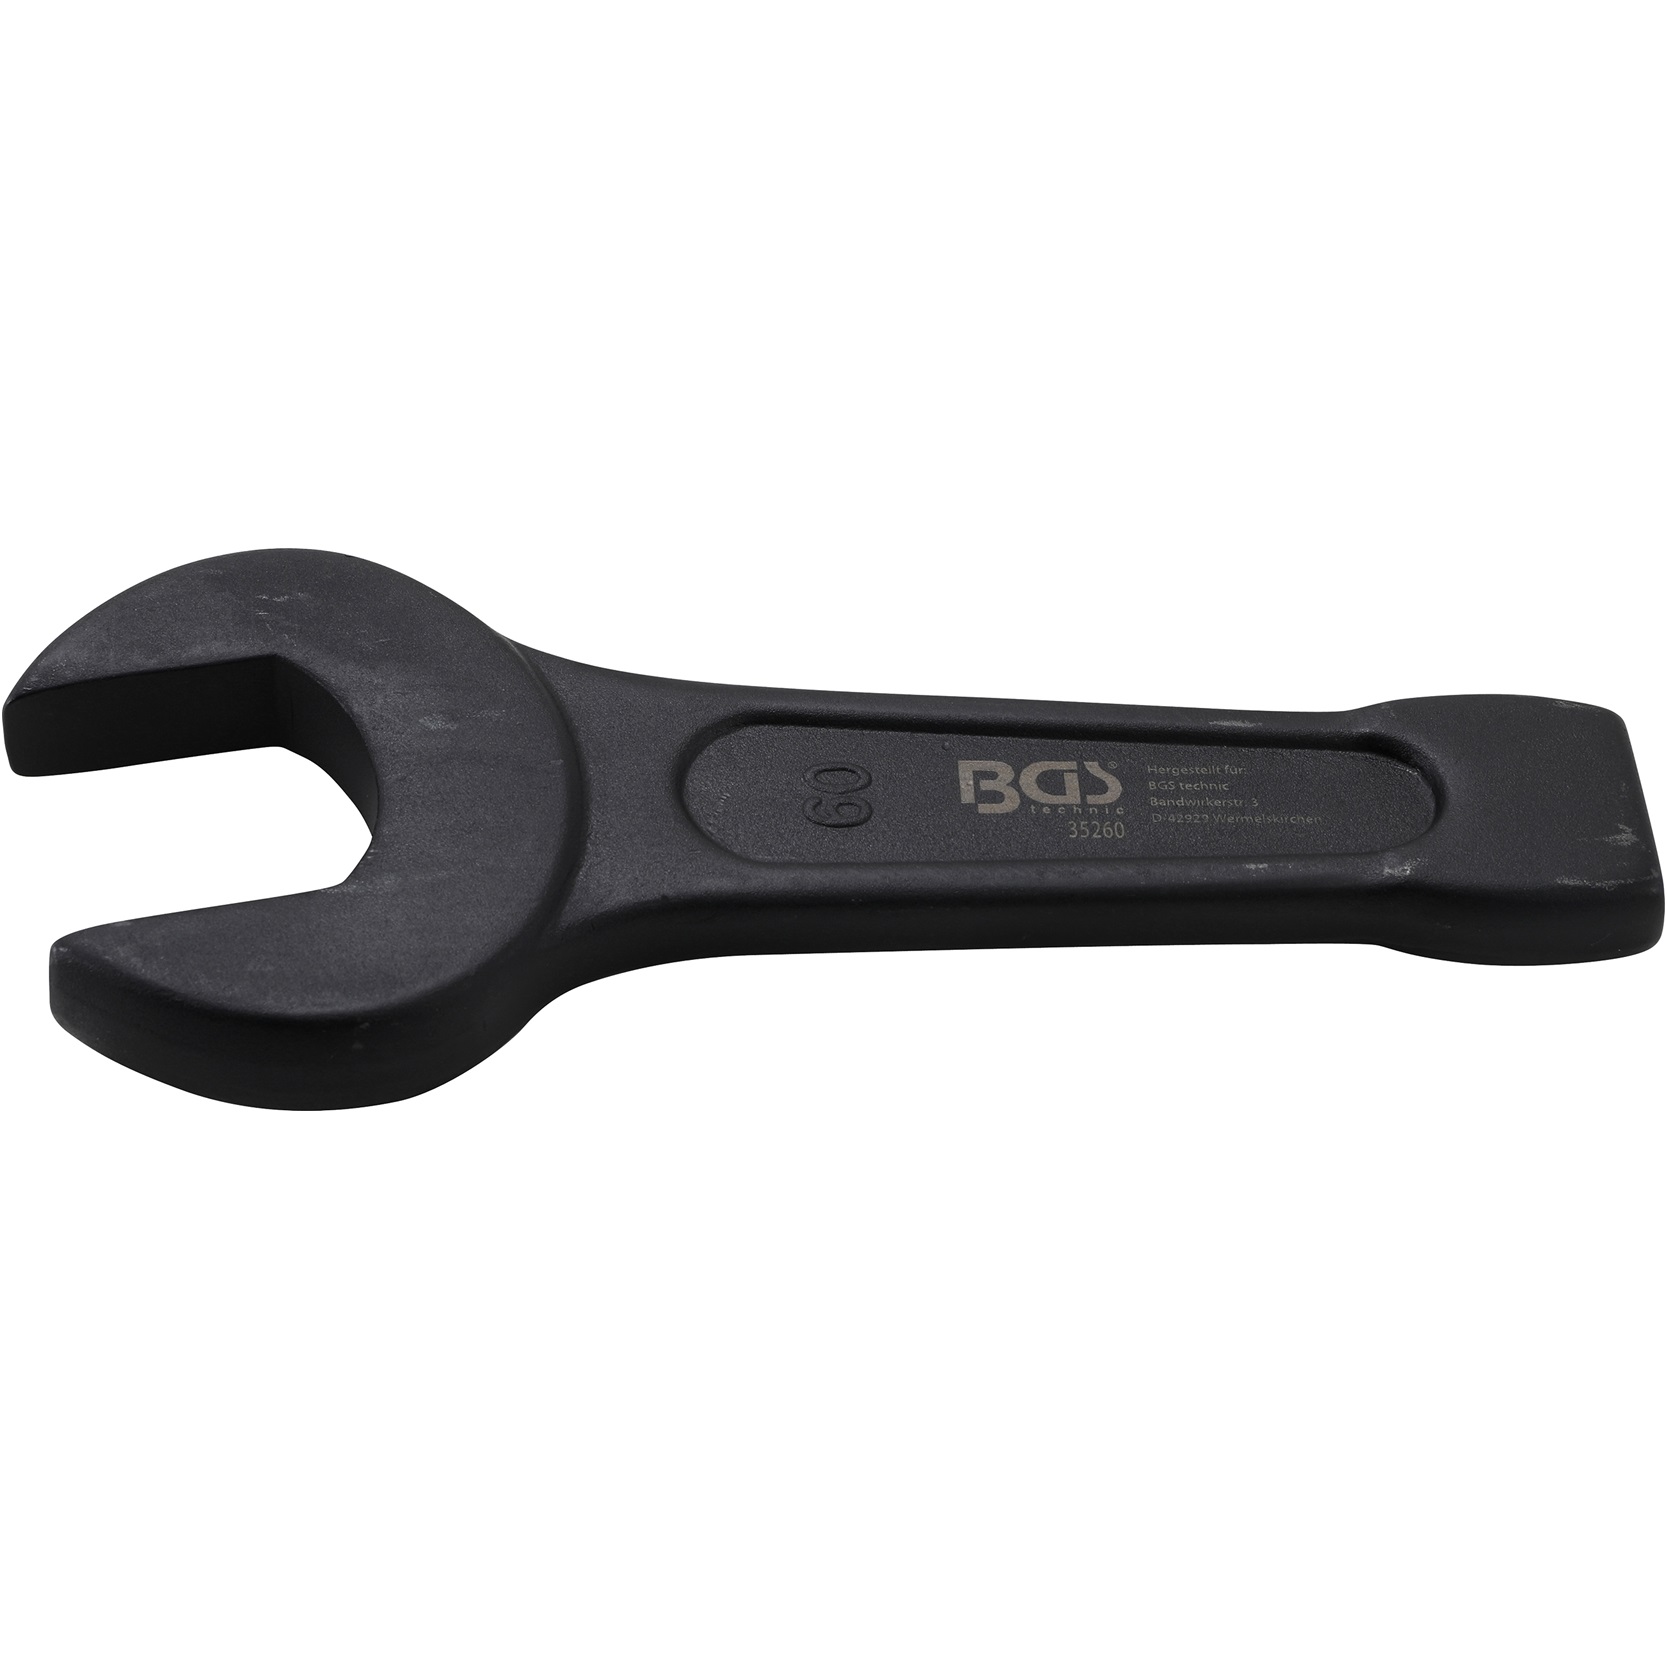 Kľúč plochý vidlicový, úderový, 60 mm BGS 35260